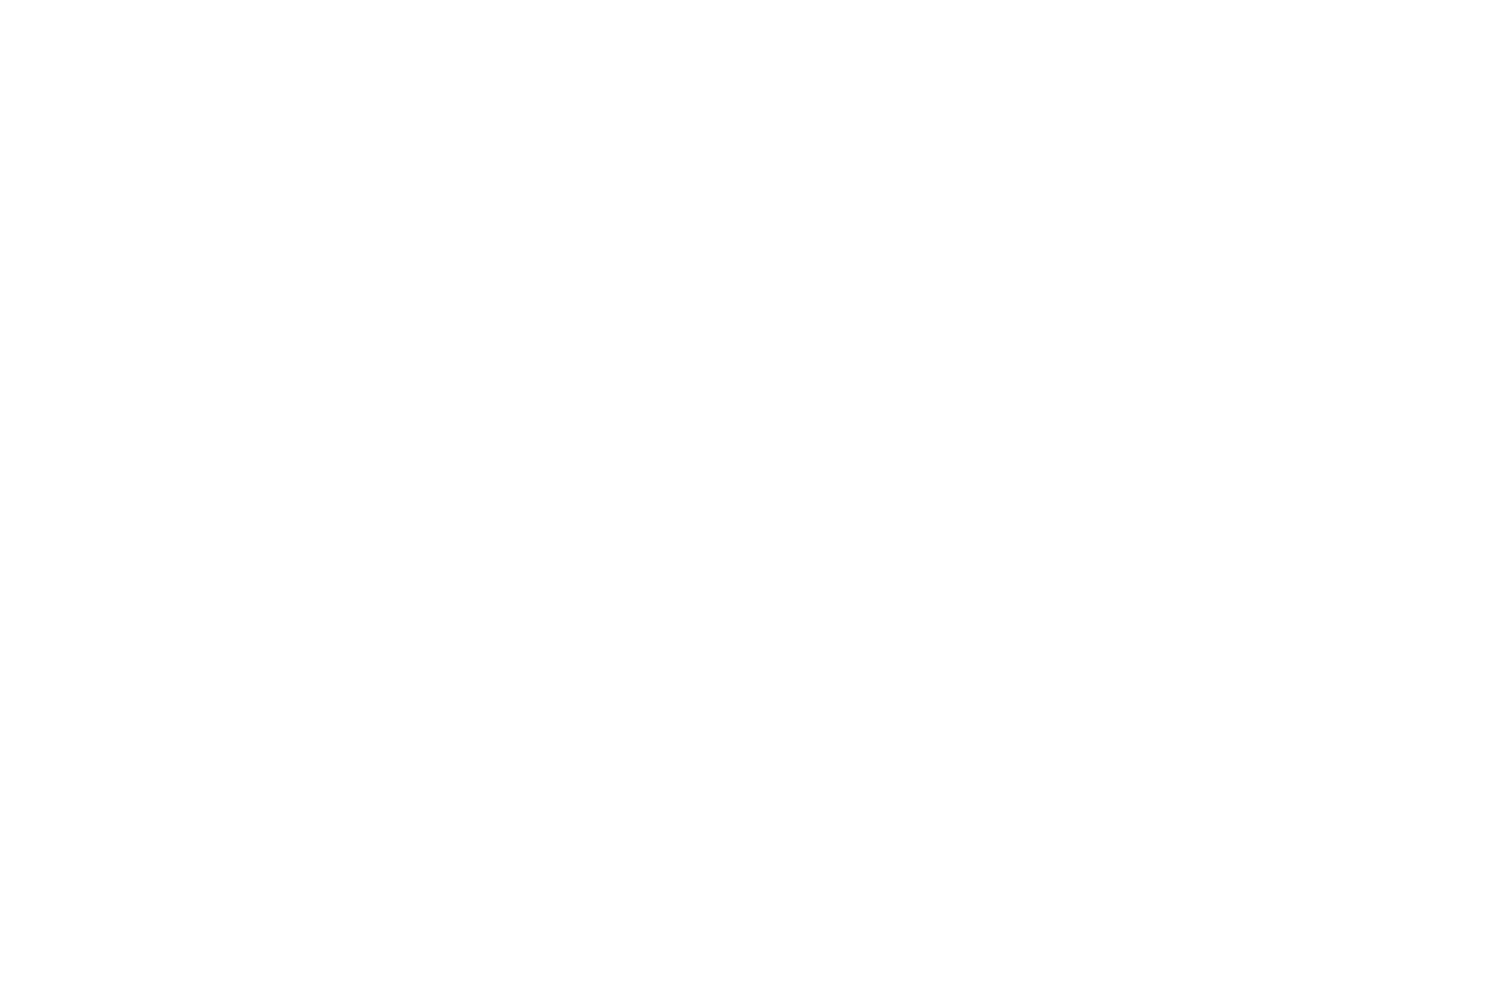 Ivy B Photography